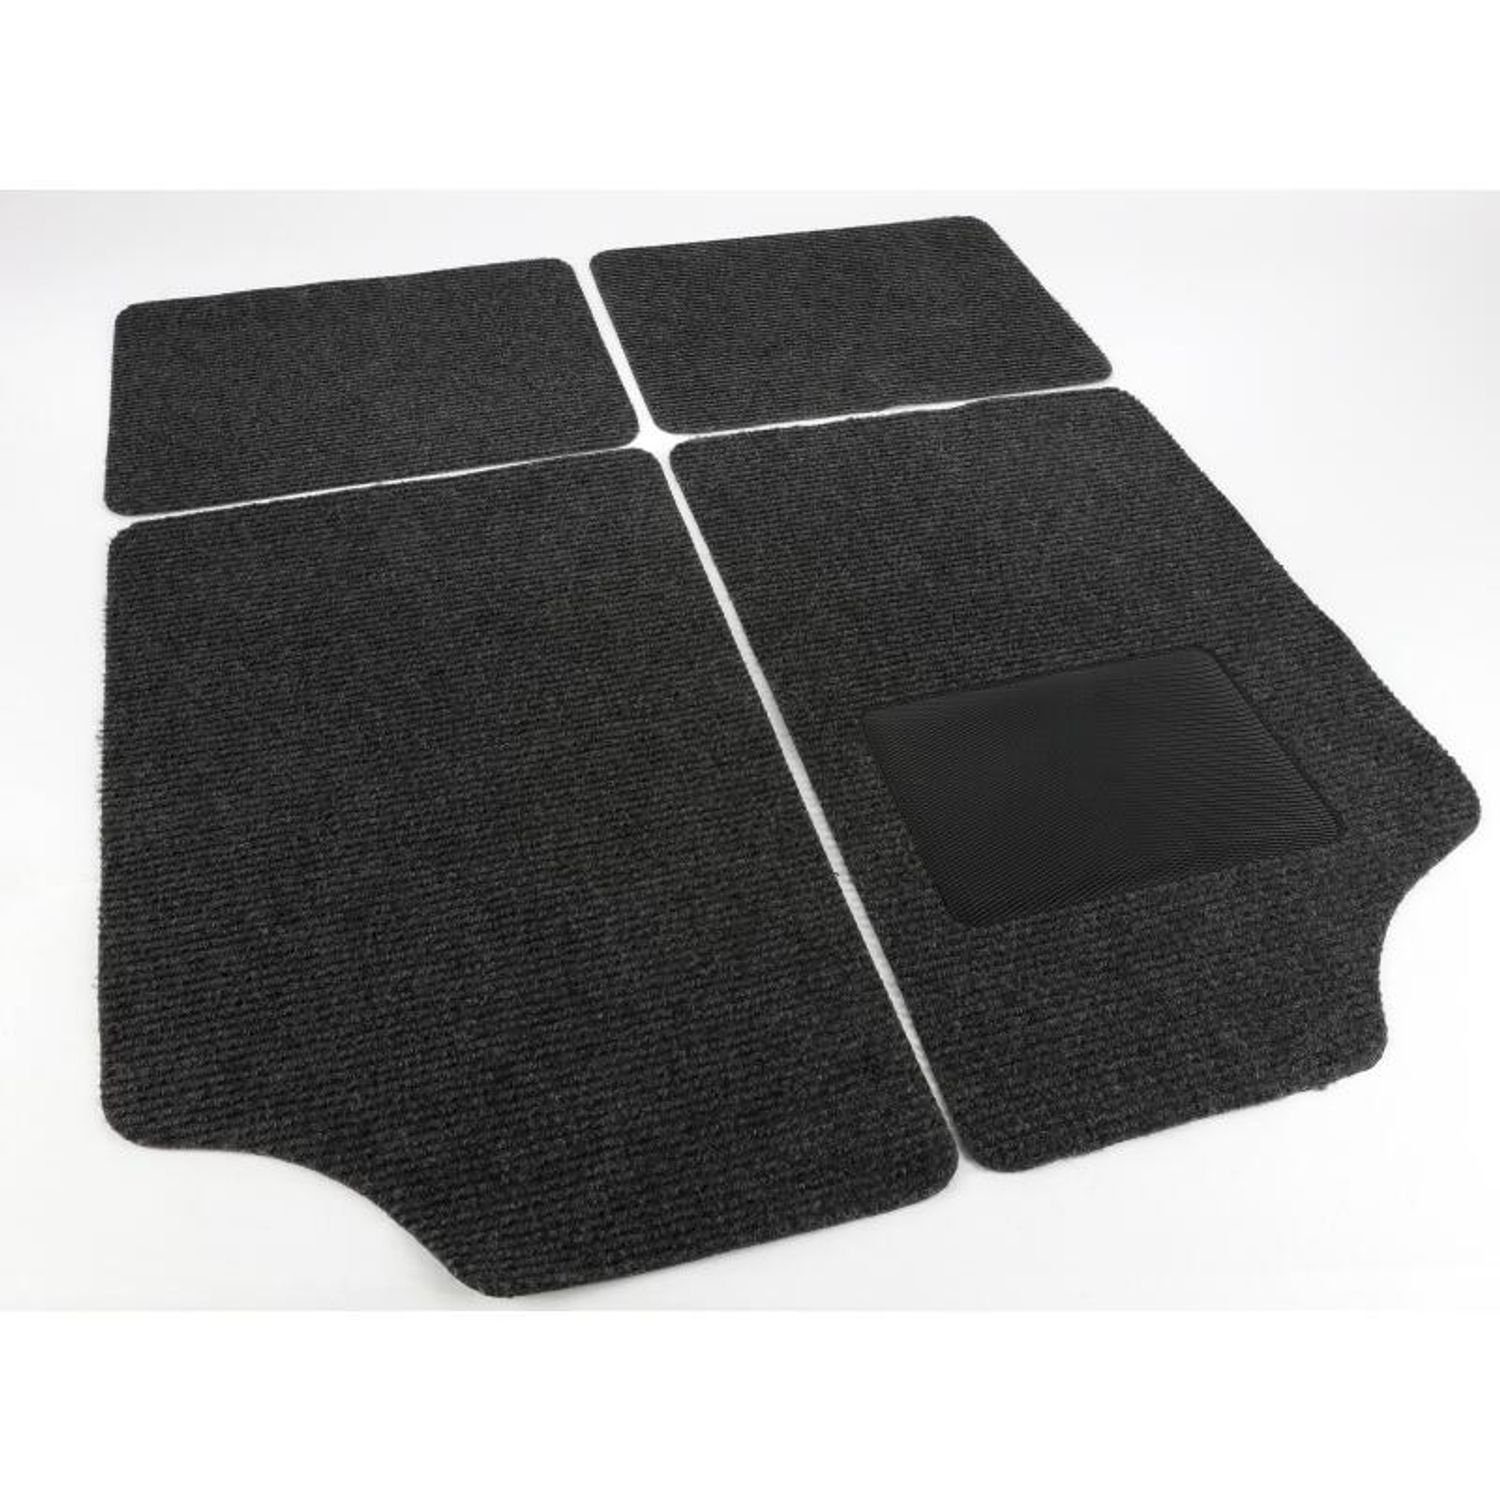 Gebufa Multimat Auto-Fußmatte 10 x Auto Fußmatten Set 4 teilig Schwarz Teppich Passform Textil Fahrz